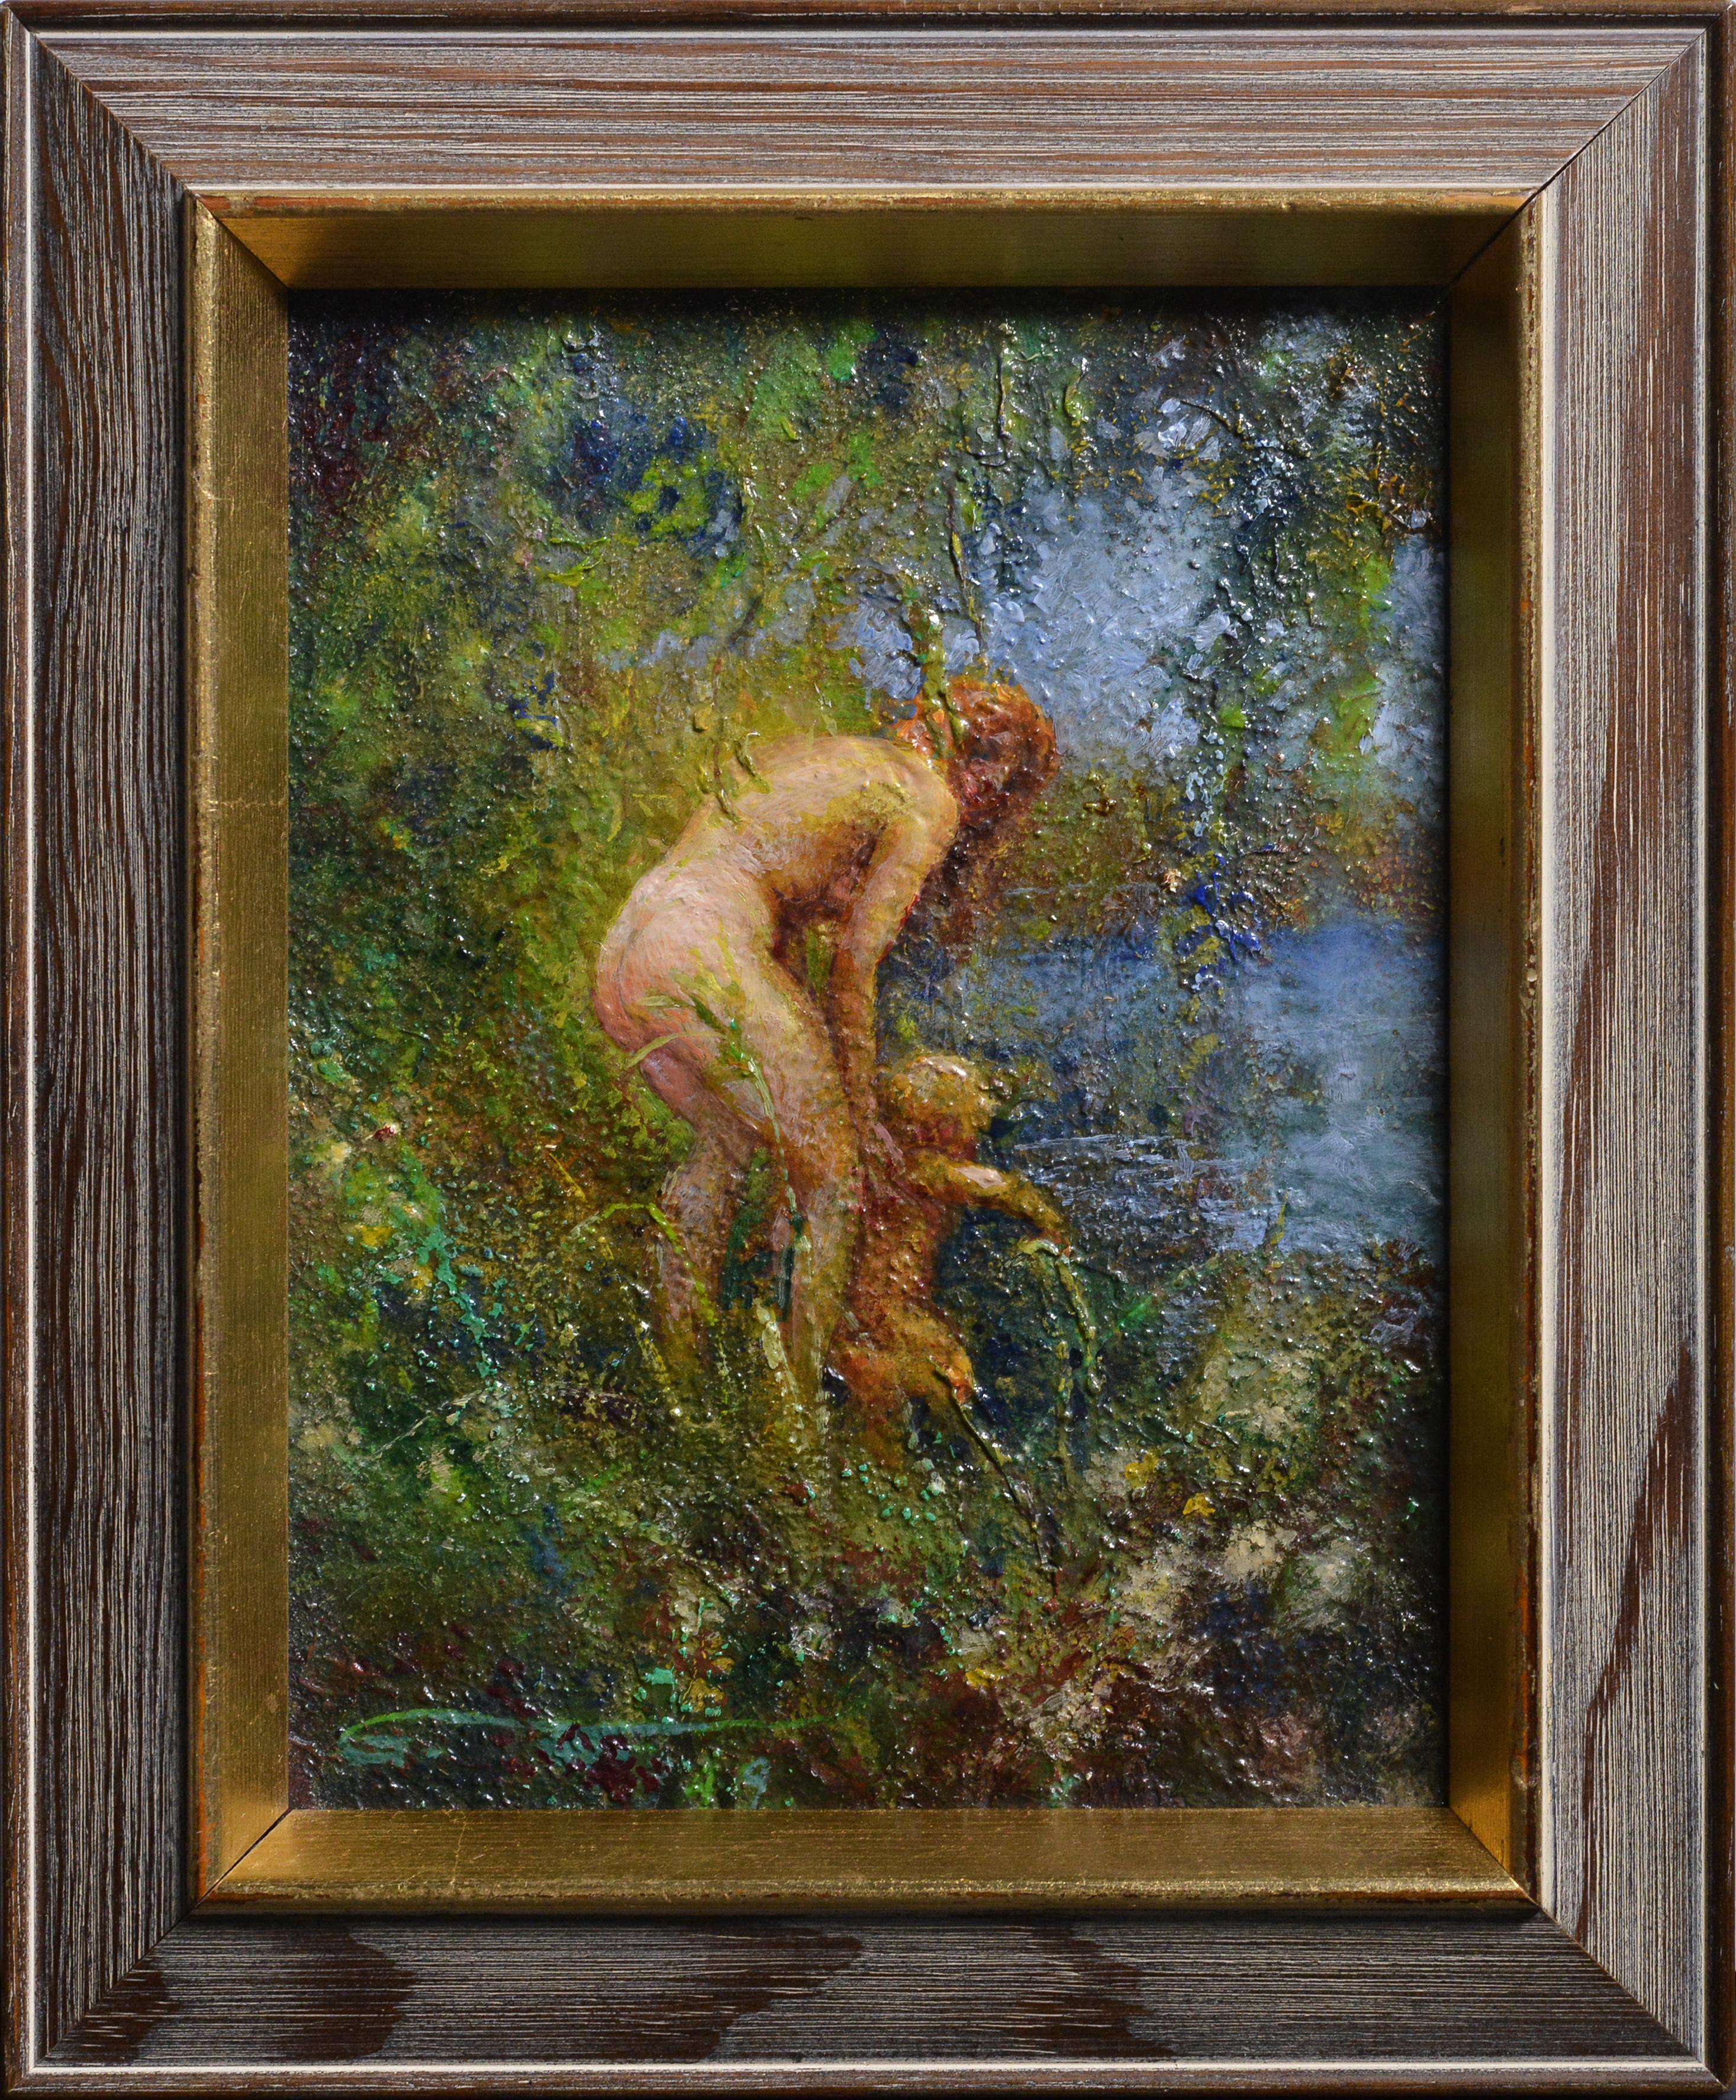 Frau im Fluss badet Kind, ca. 1932, Ölgemälde des schwedischen Meisters Widholm